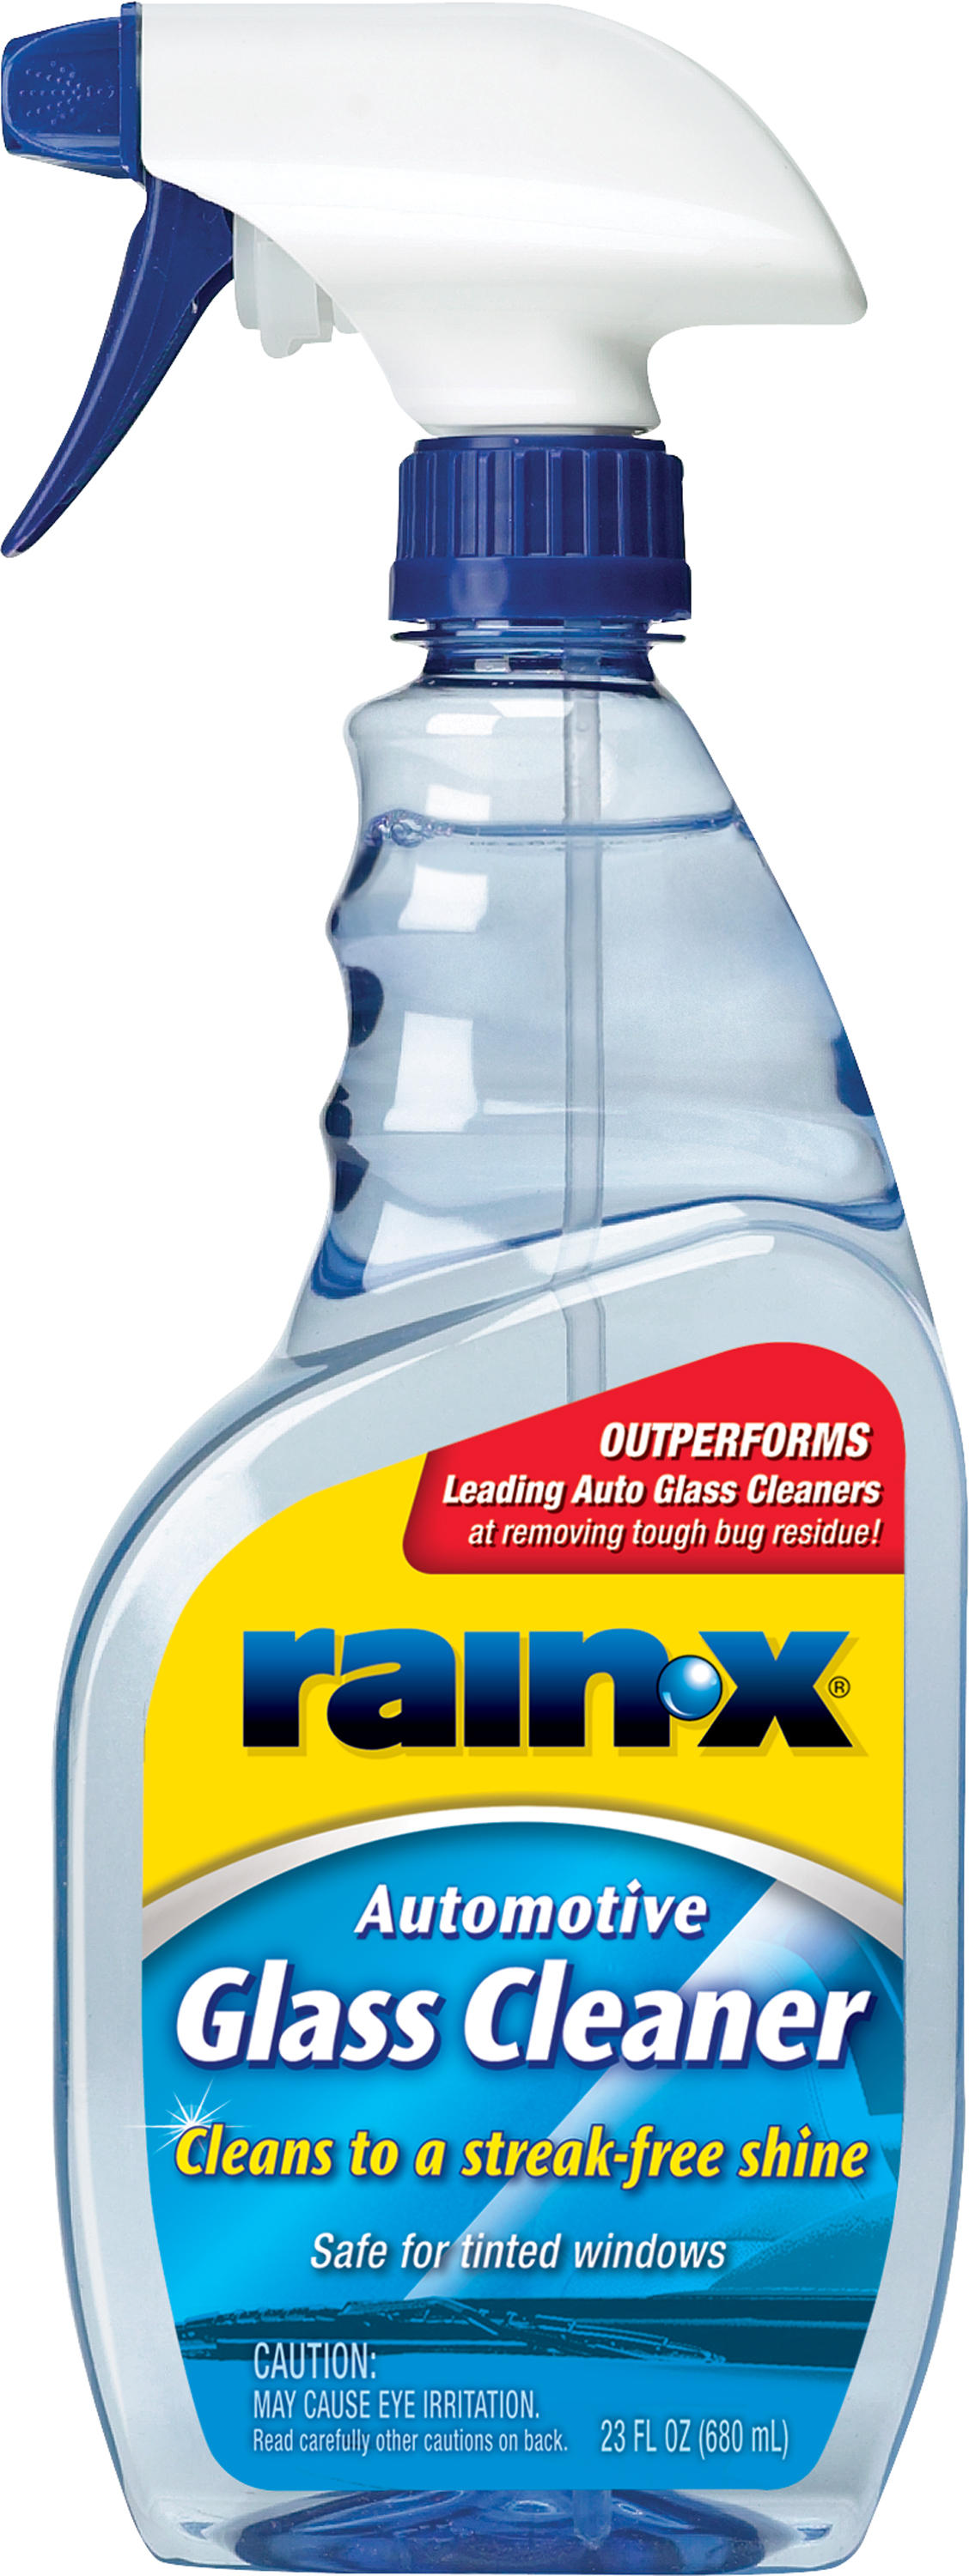 ITW Rain-X Windshield Window Treatment - 3.5 fl oz bottle